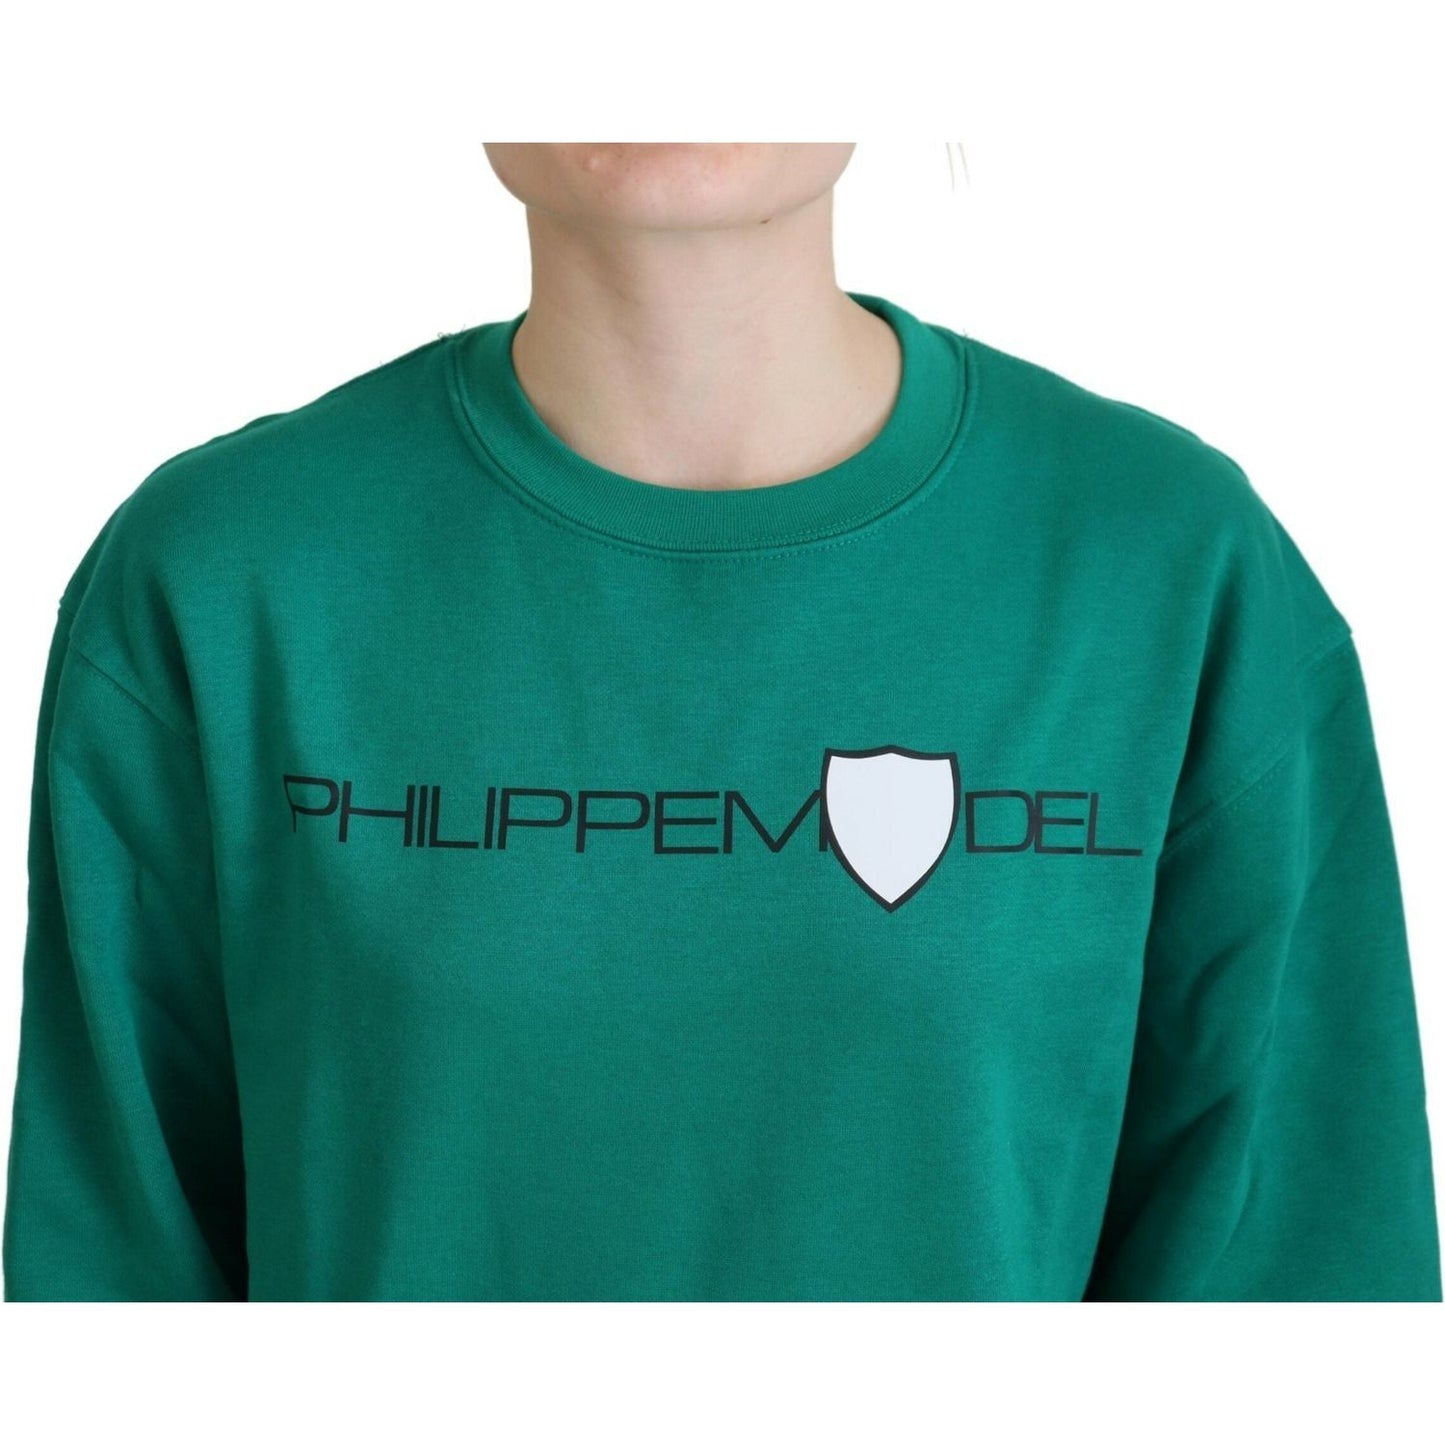 Philippe Model Chic Green Printed Long Sleeve Sweater green-printed-long-sleeves-pullover-sweater IMG_9248-scaled-4798816c-934.jpg